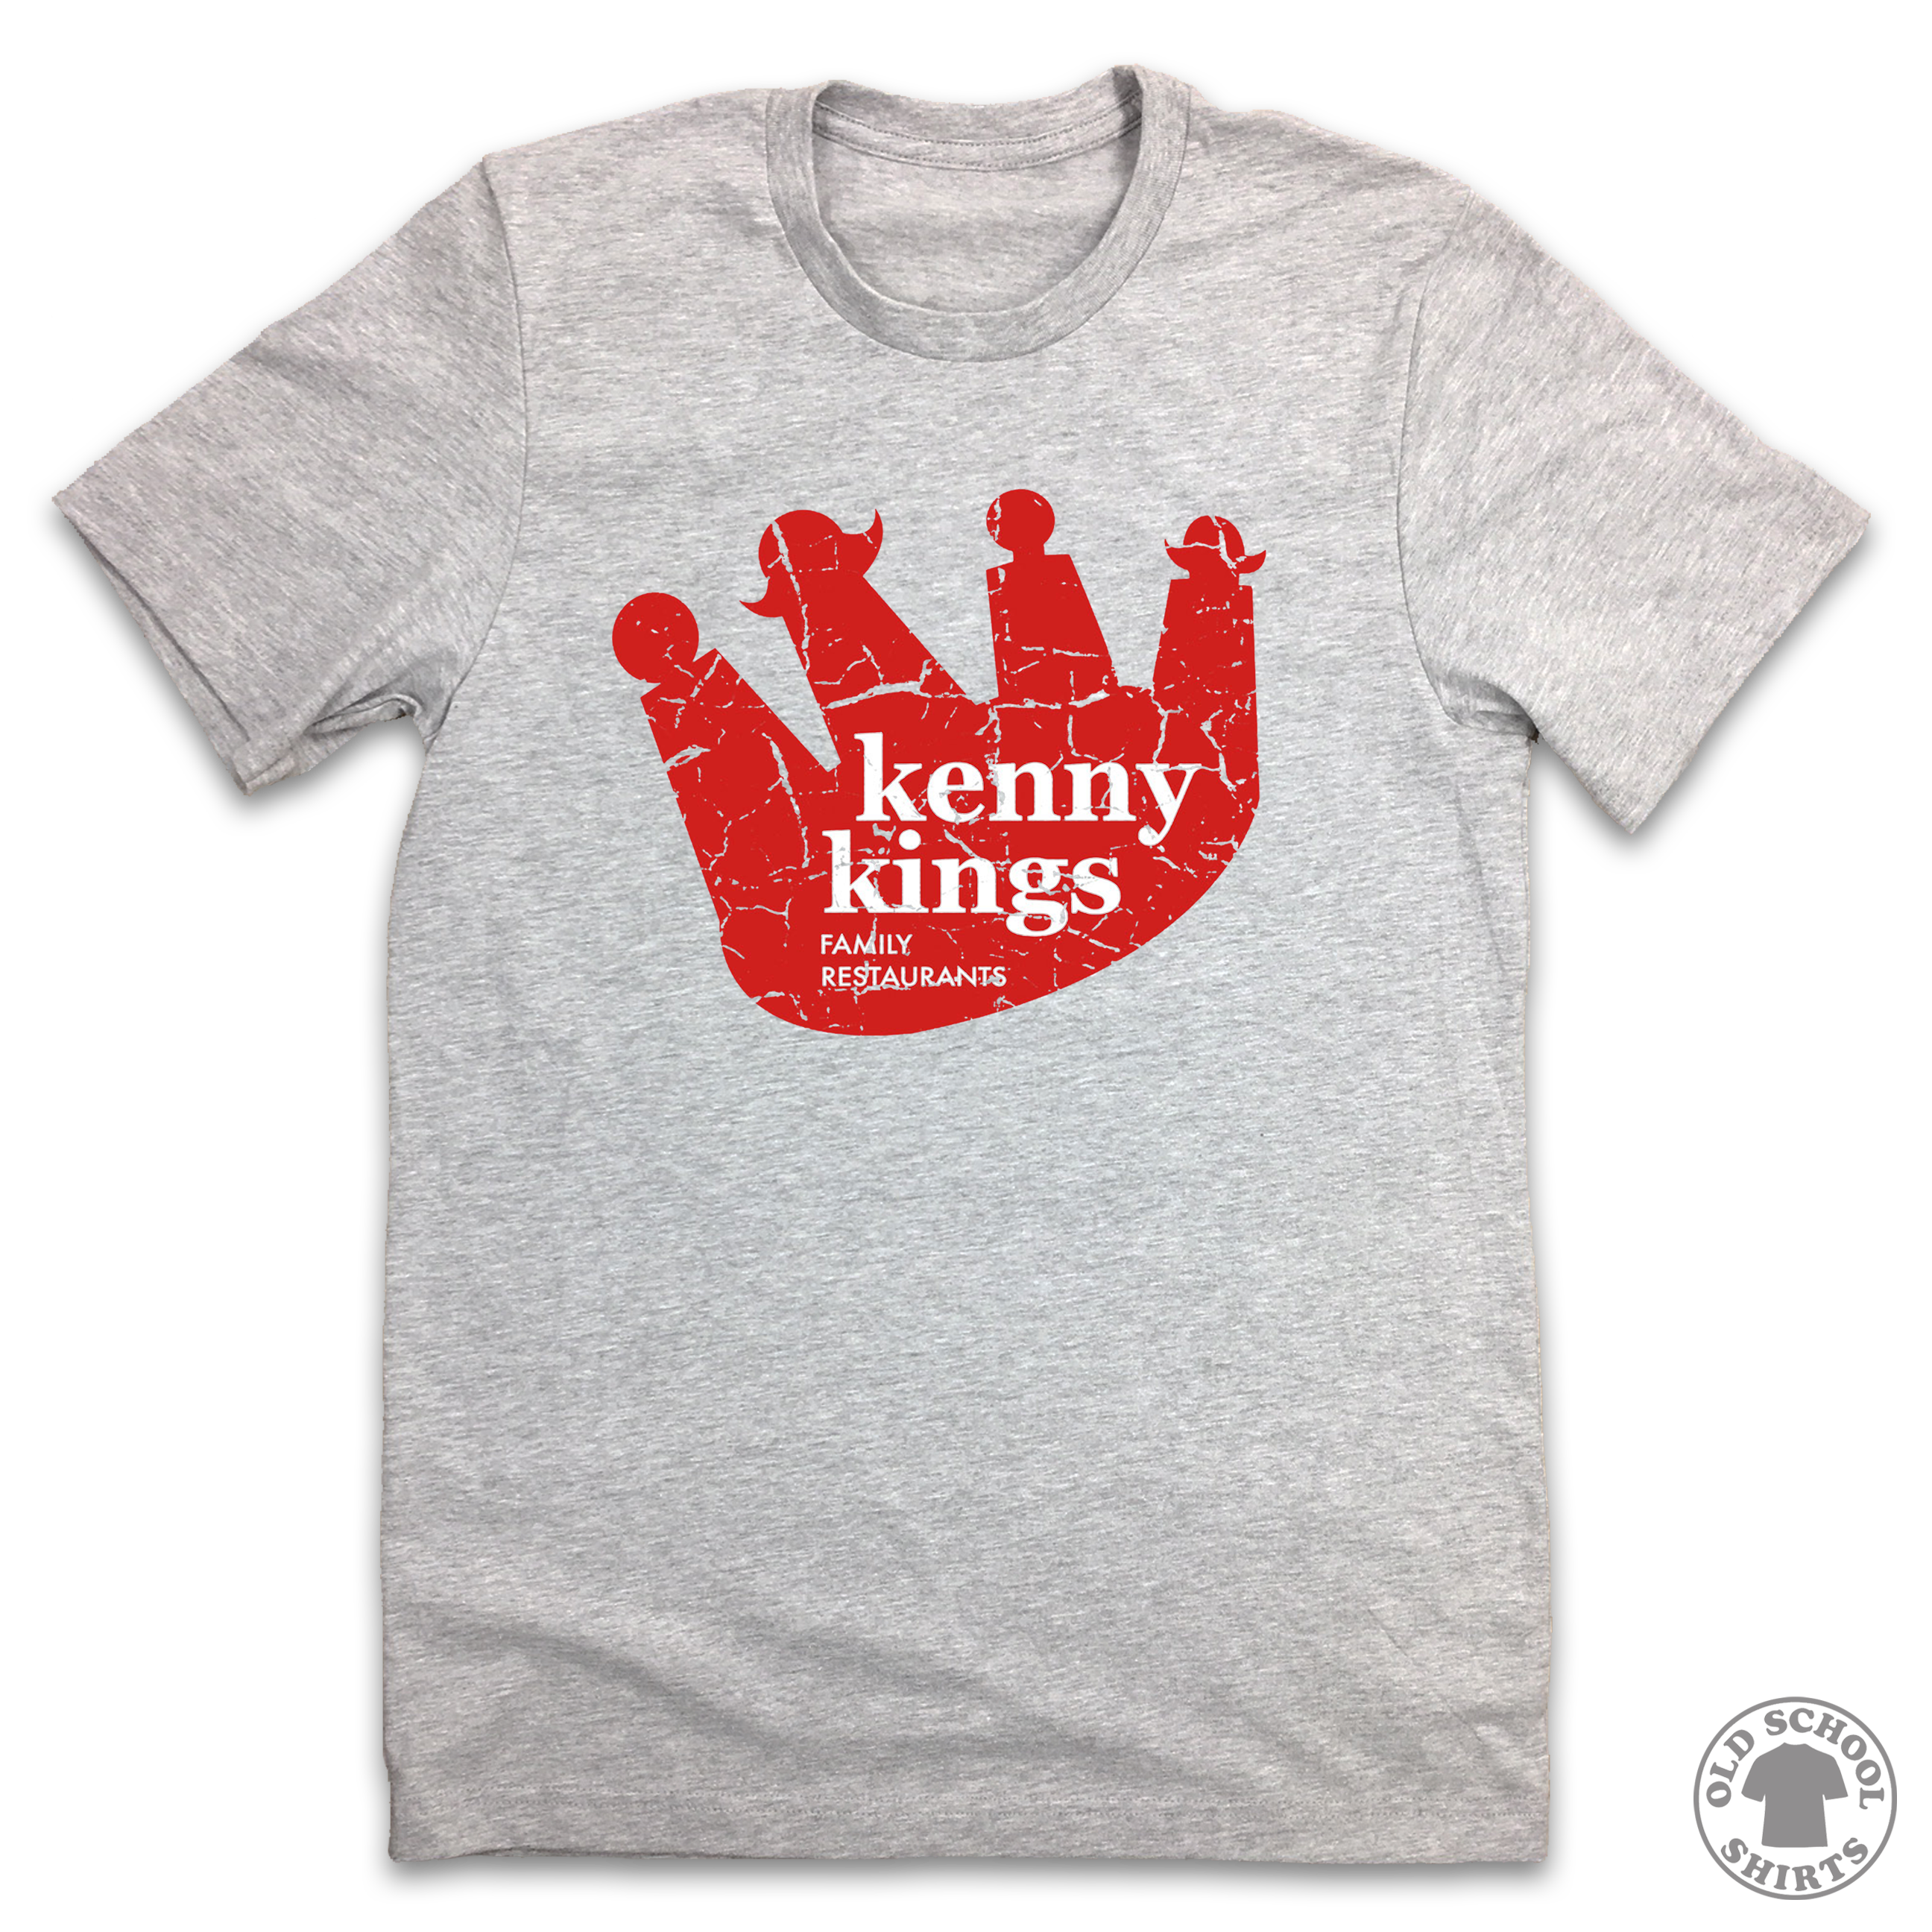 Kenny King's Family Restaurants - Old School Shirts- Retro Sports T Shirts